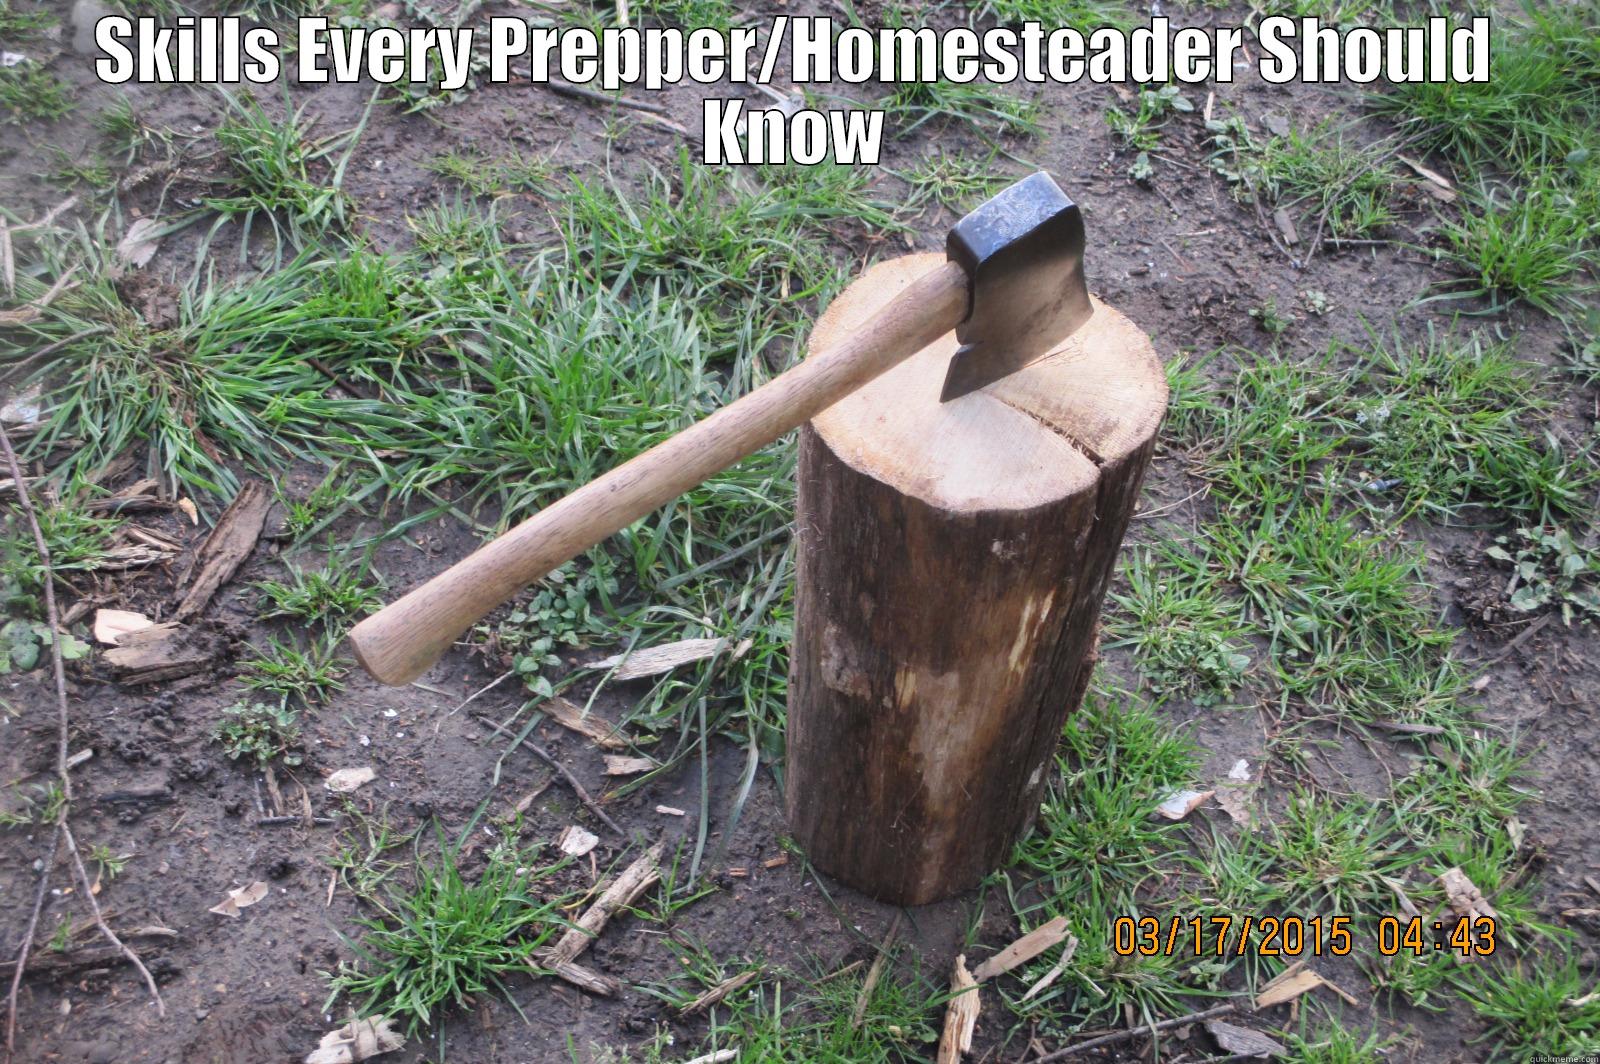 Skills Every Prepper/Homesteader Should Know - SKILLS EVERY PREPPER/HOMESTEADER SHOULD KNOW  Misc